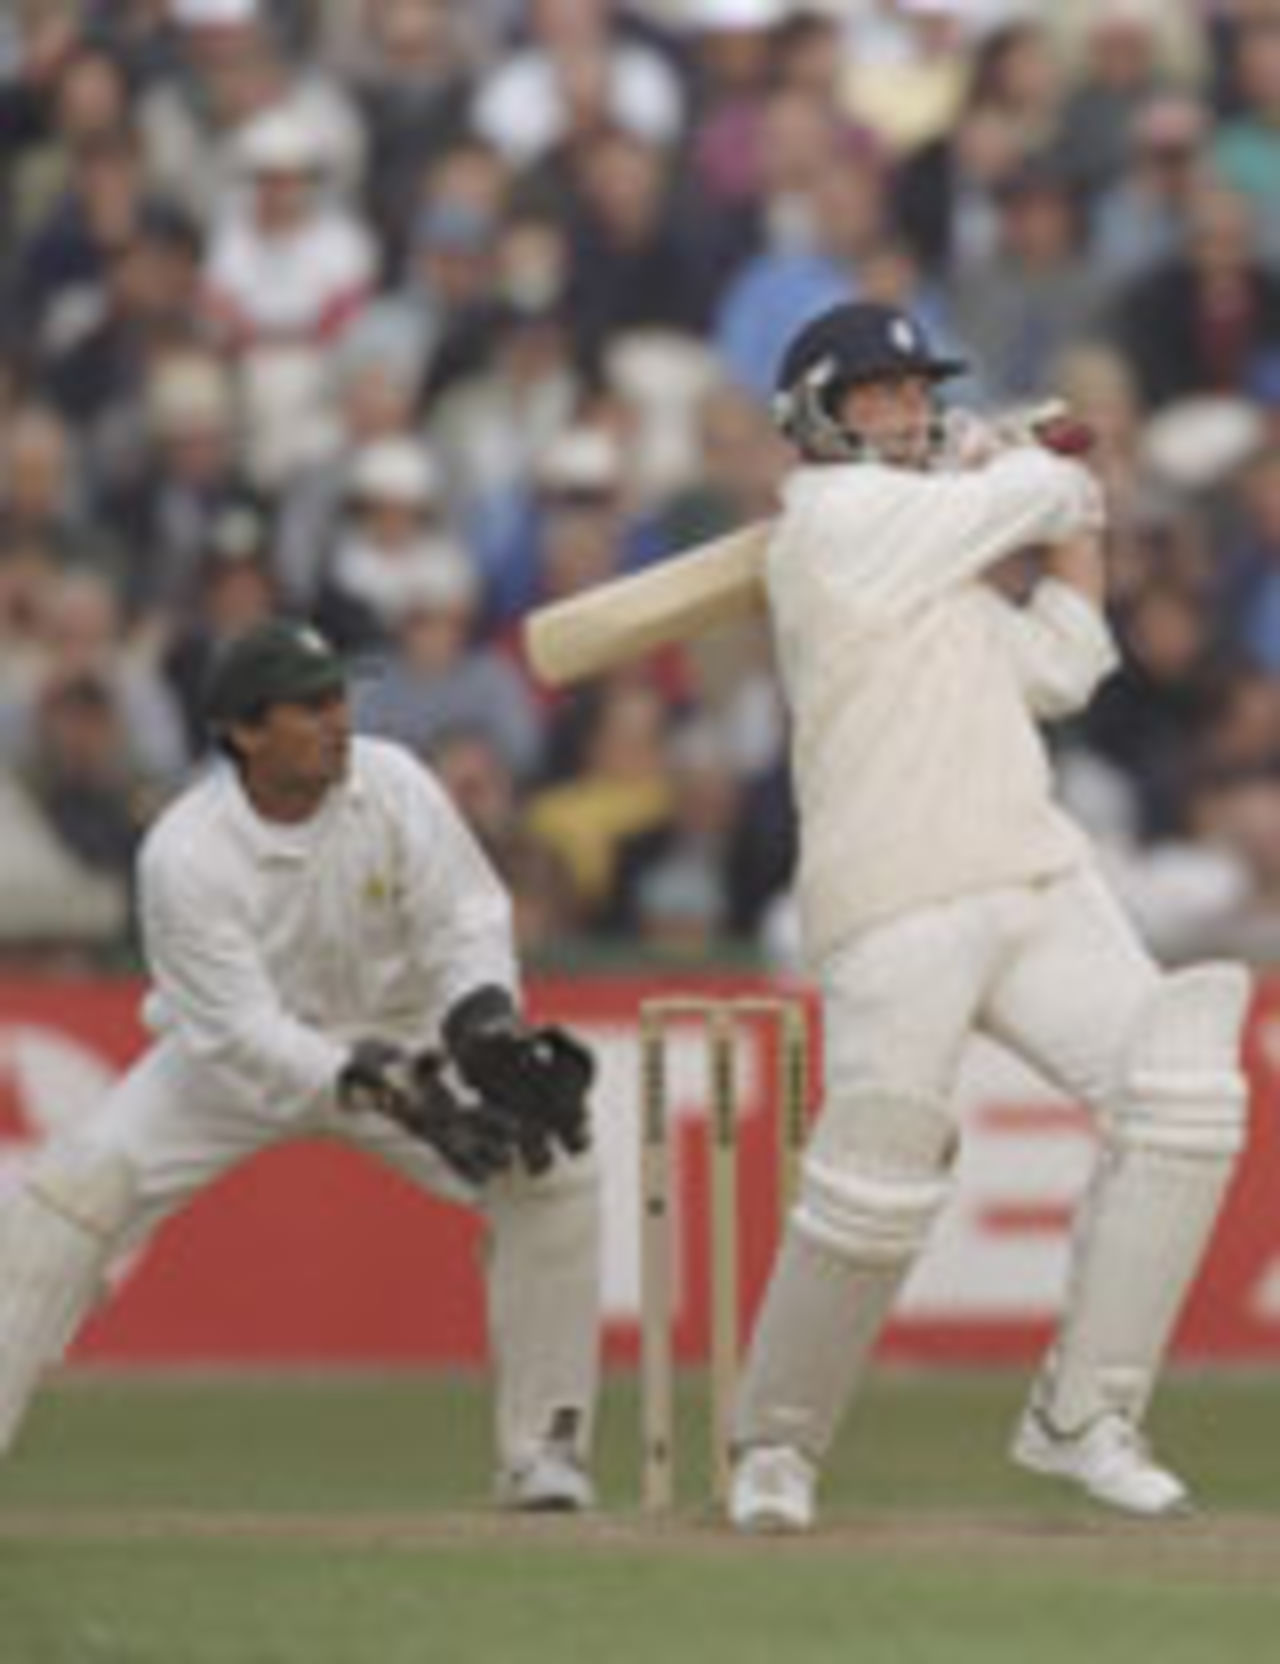 Matthew Maynard batting for England v Pakistan, Old Trafford, August 29, 1996